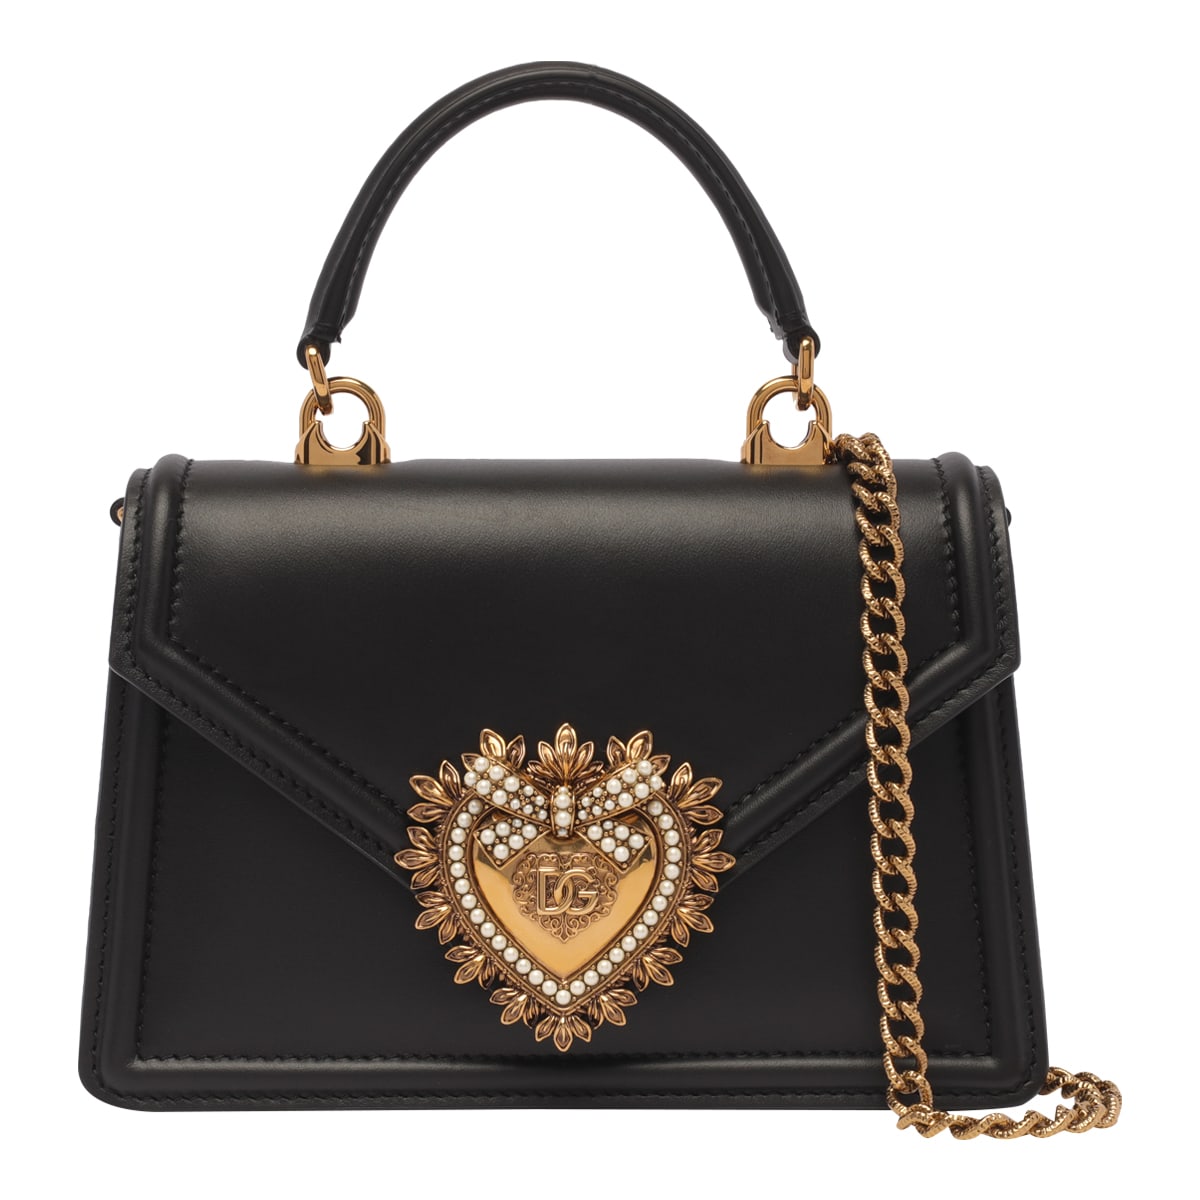 Dolce & Gabbana Small Devotion Handbag